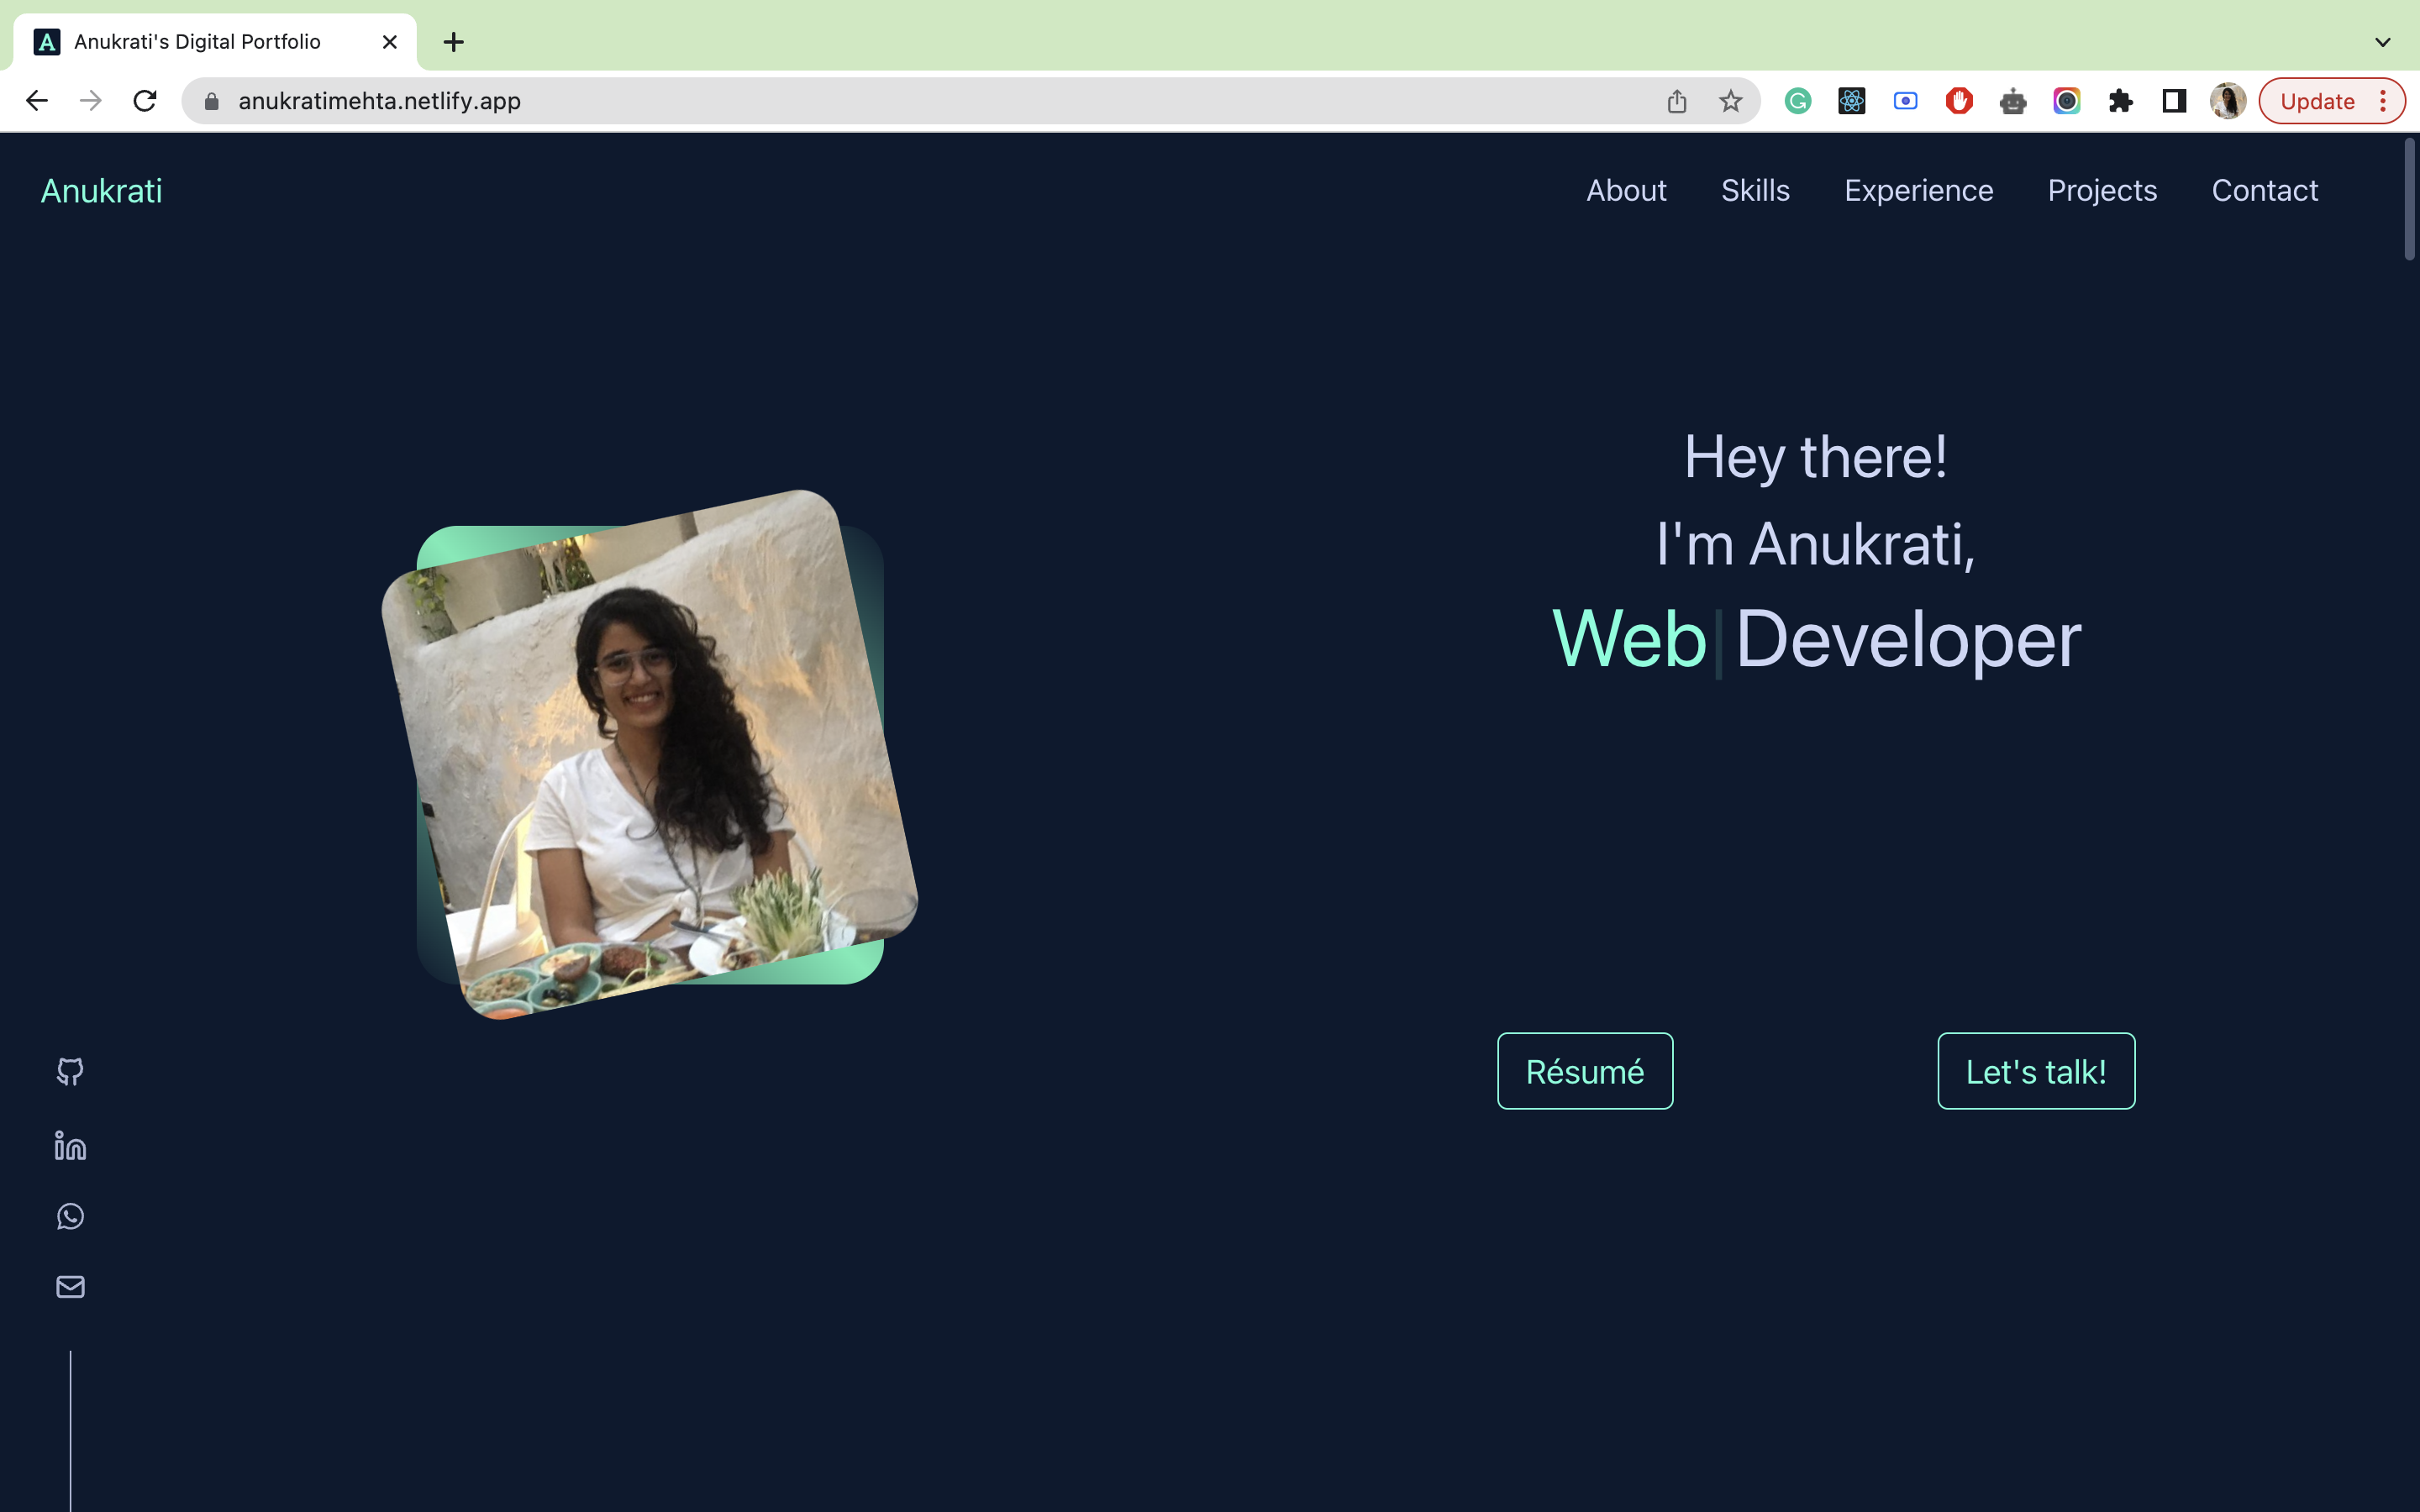 Anukrati's Digital Portfolio Xx +

 

« C  & anukratimehta.netlify.app © O@&@ @ » 0 A (‘Update P)

Anukrati About ~~ Skills Experience Projects Contact

Hey there!
EnV aVI<E1

Web Developer

 

4 - - ‘
9) Let's talk!

if)